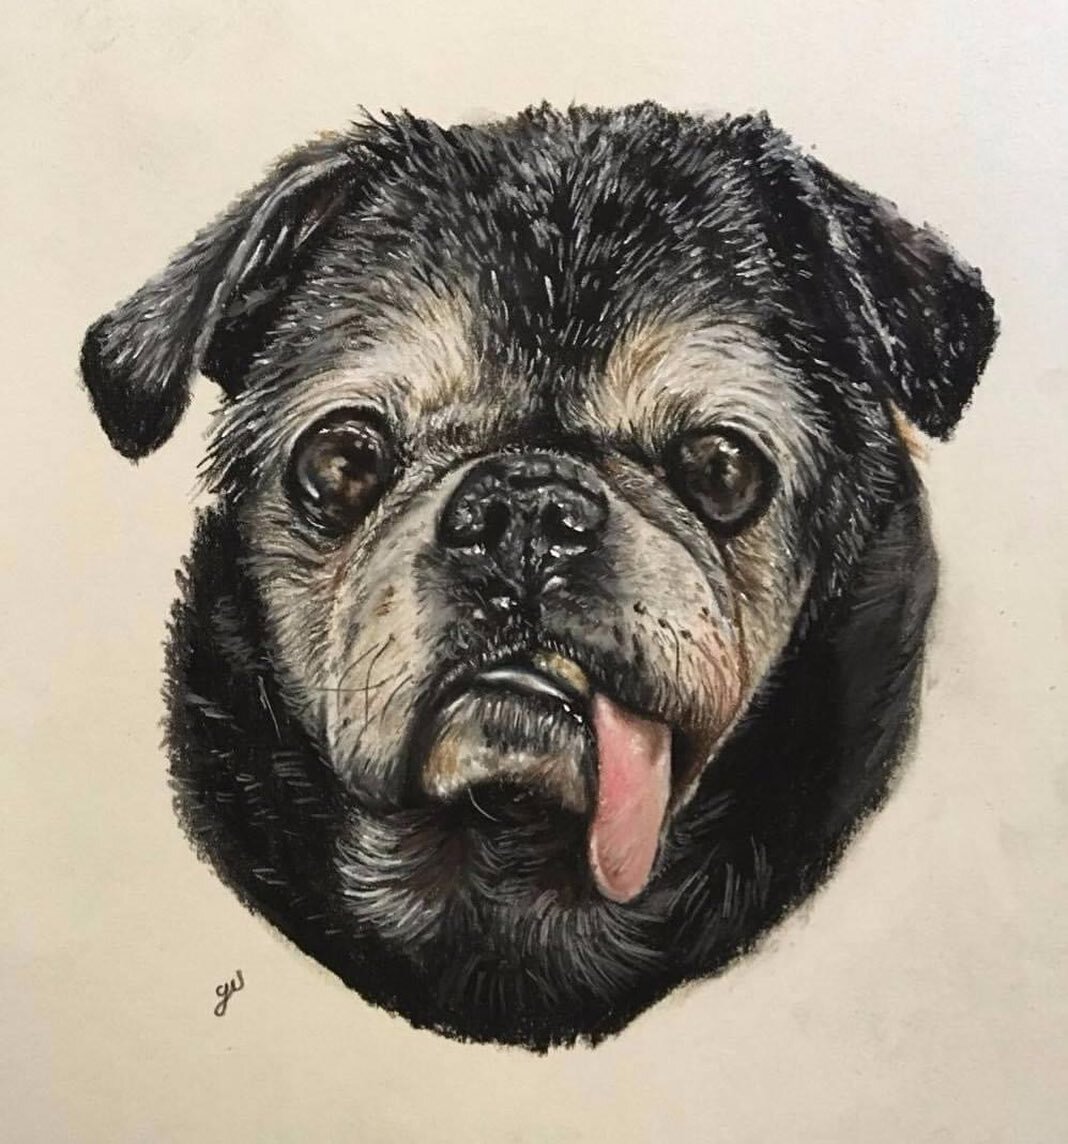 Reposting a portrait from 2018.
Pastel, 8&rdquo; x 6&rdquo;

#pug #seniorpug #puglife #pugportrait #art #drawing #petportrait #dogart